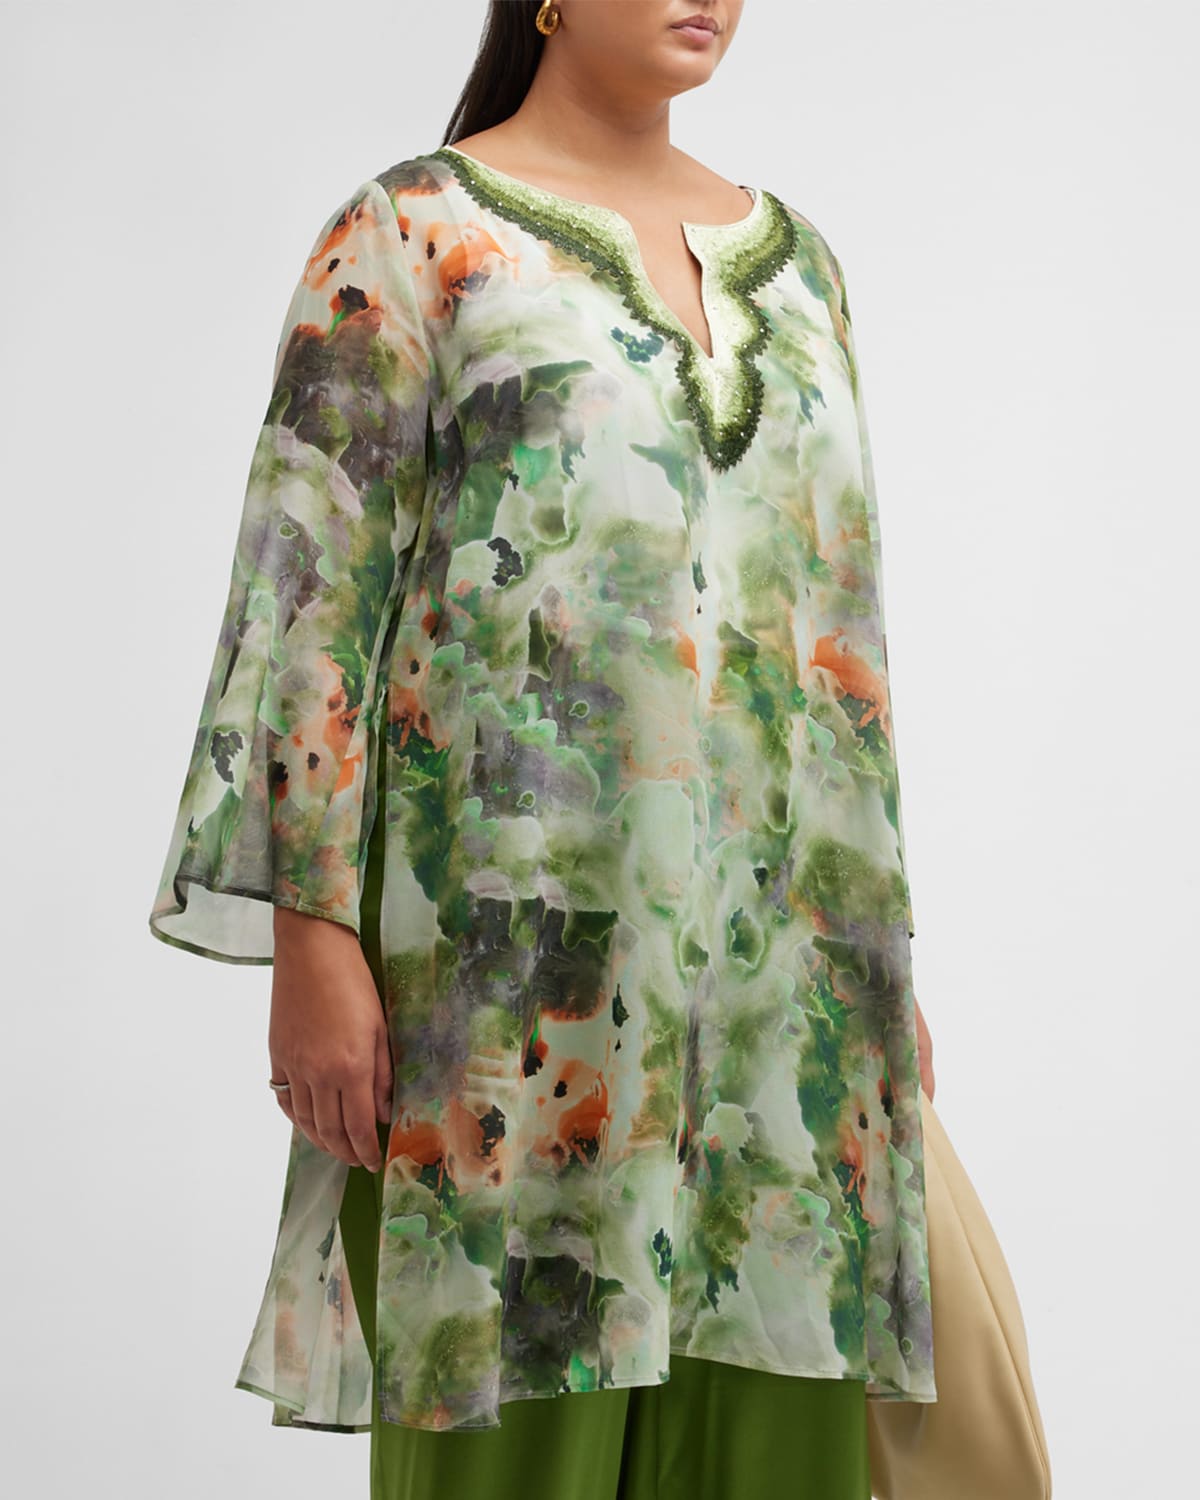 Valentina Marble-Print Embroidered Silk Tunic